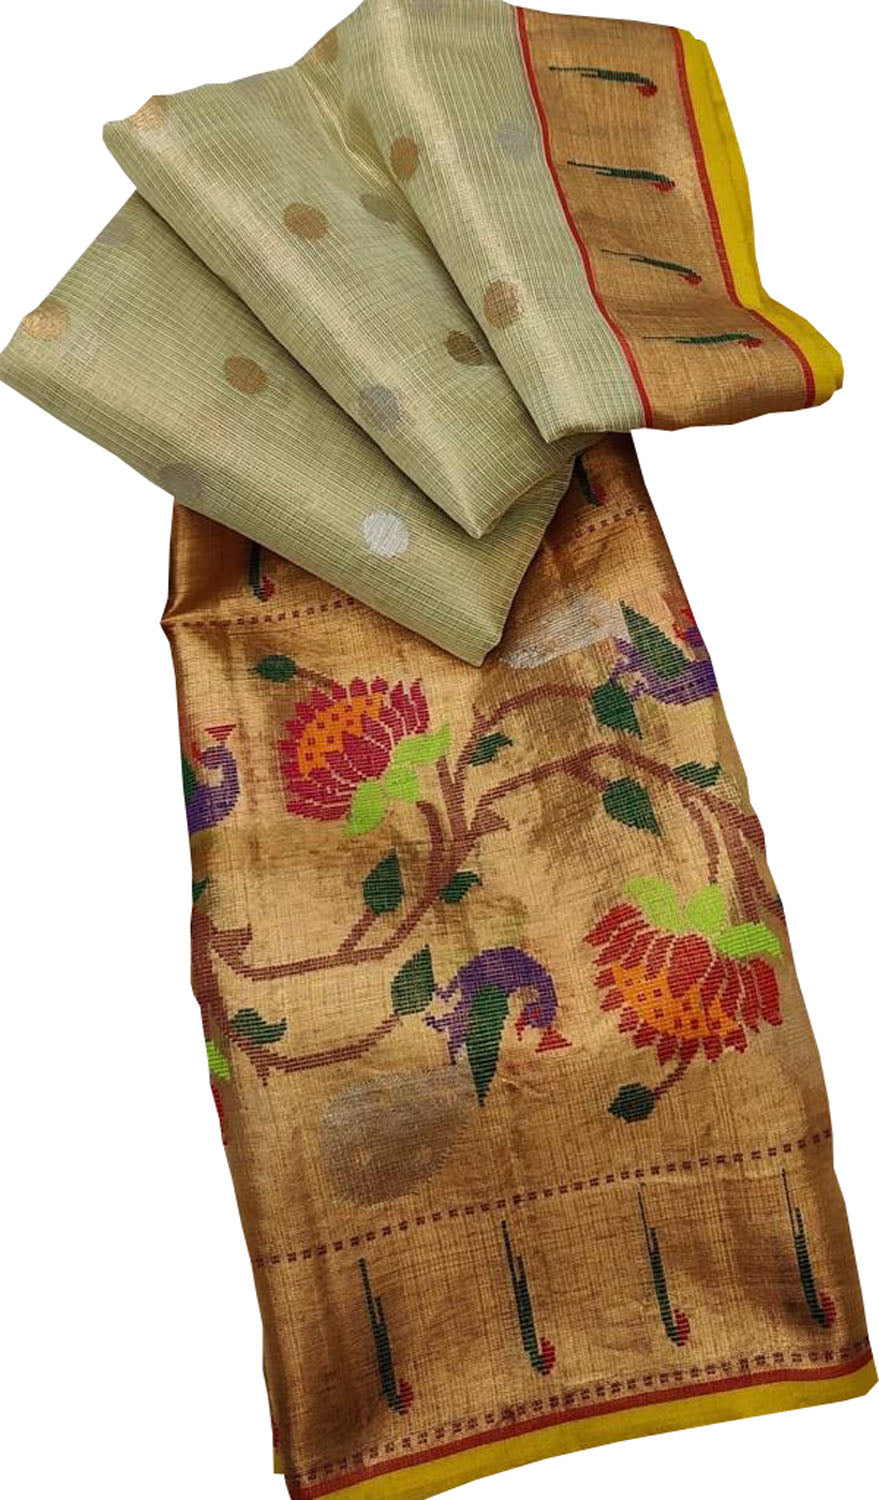 Shop Now for Green Kota Doria Saree with Real Zari & Muniya Border - Ethnic Wear for Women